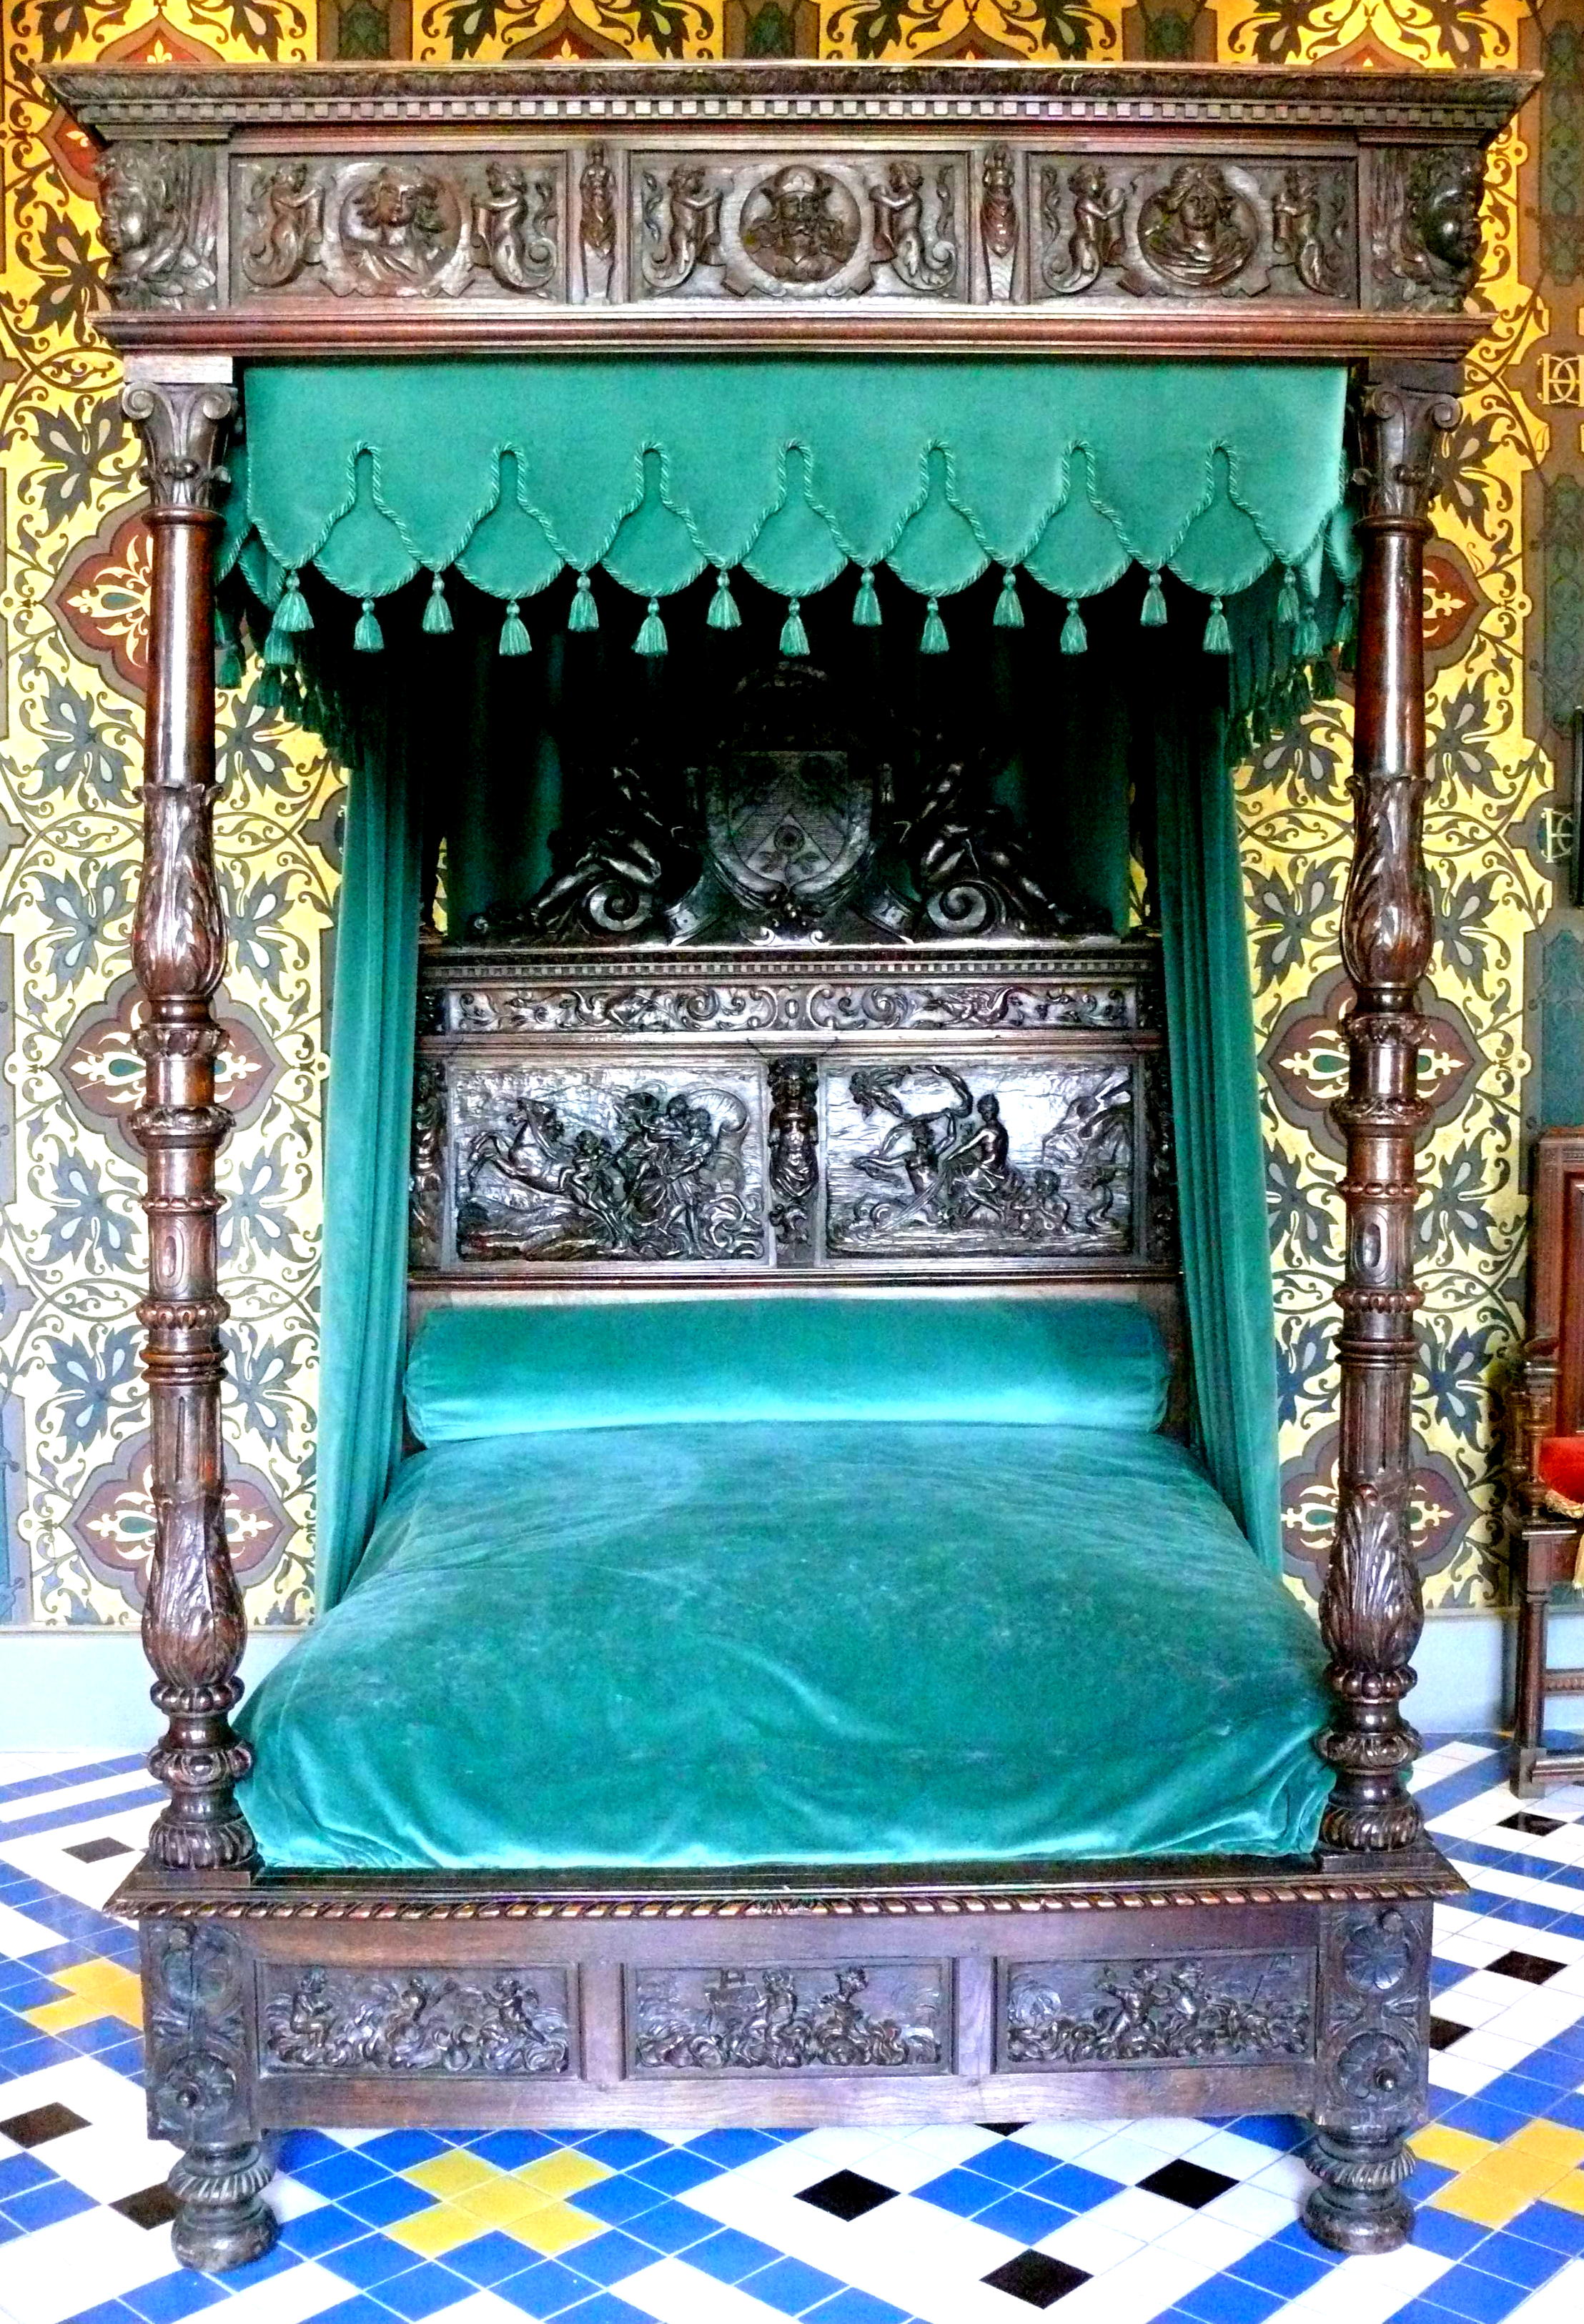 Renaissance style bed